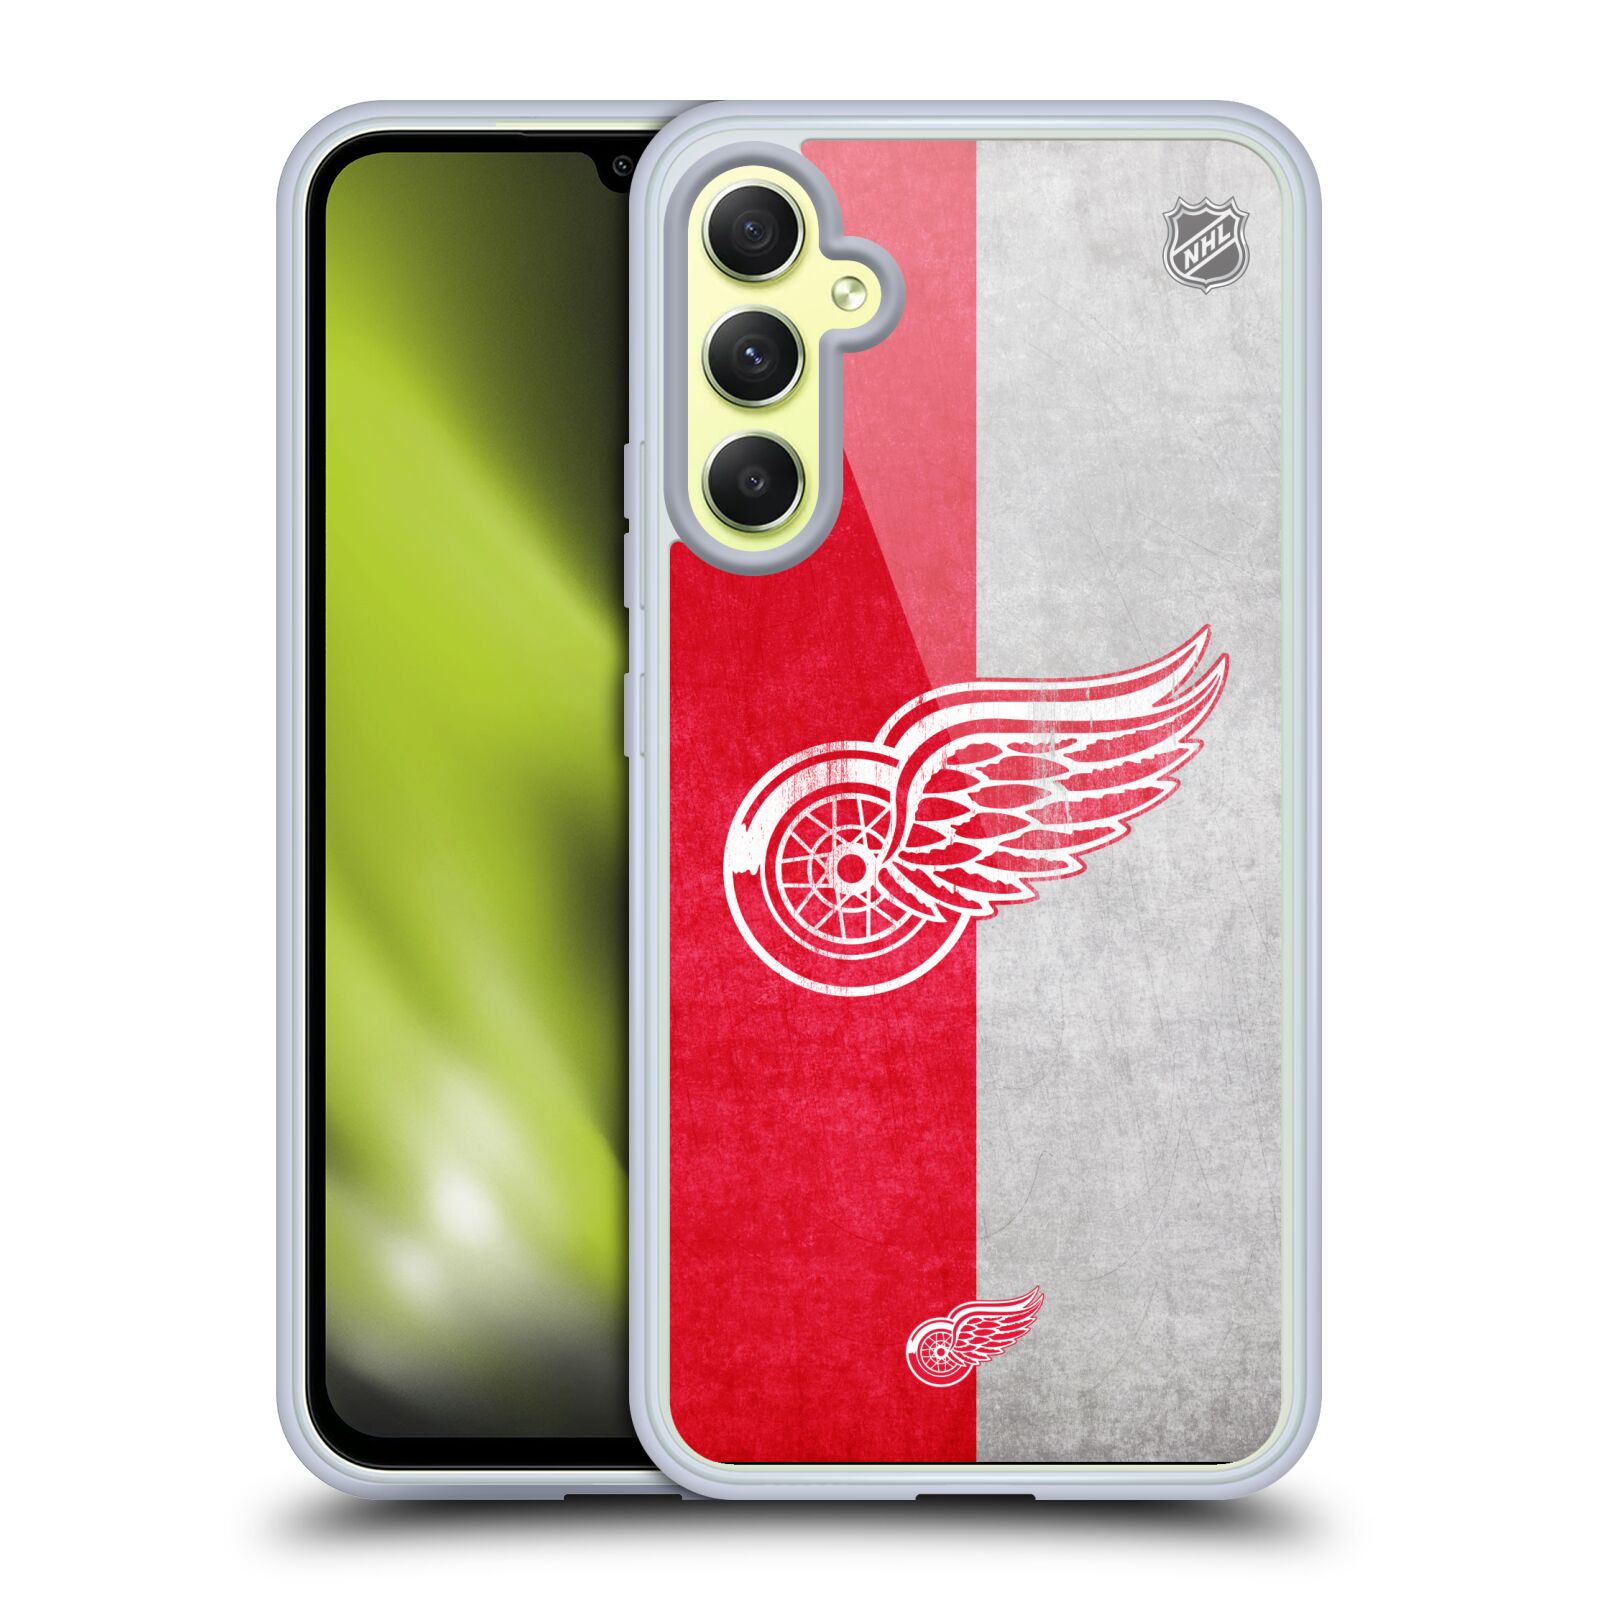 Silikonové pouzdro na mobil Samsung Galaxy A34 5G - NHL - Půlené logo Detroit Red Wings (Silikonový kryt, obal, pouzdro na mobilní telefon Samsung Galaxy A34 5G s licencovaným motivem NHL - Půlené logo Detroit Red Wings)